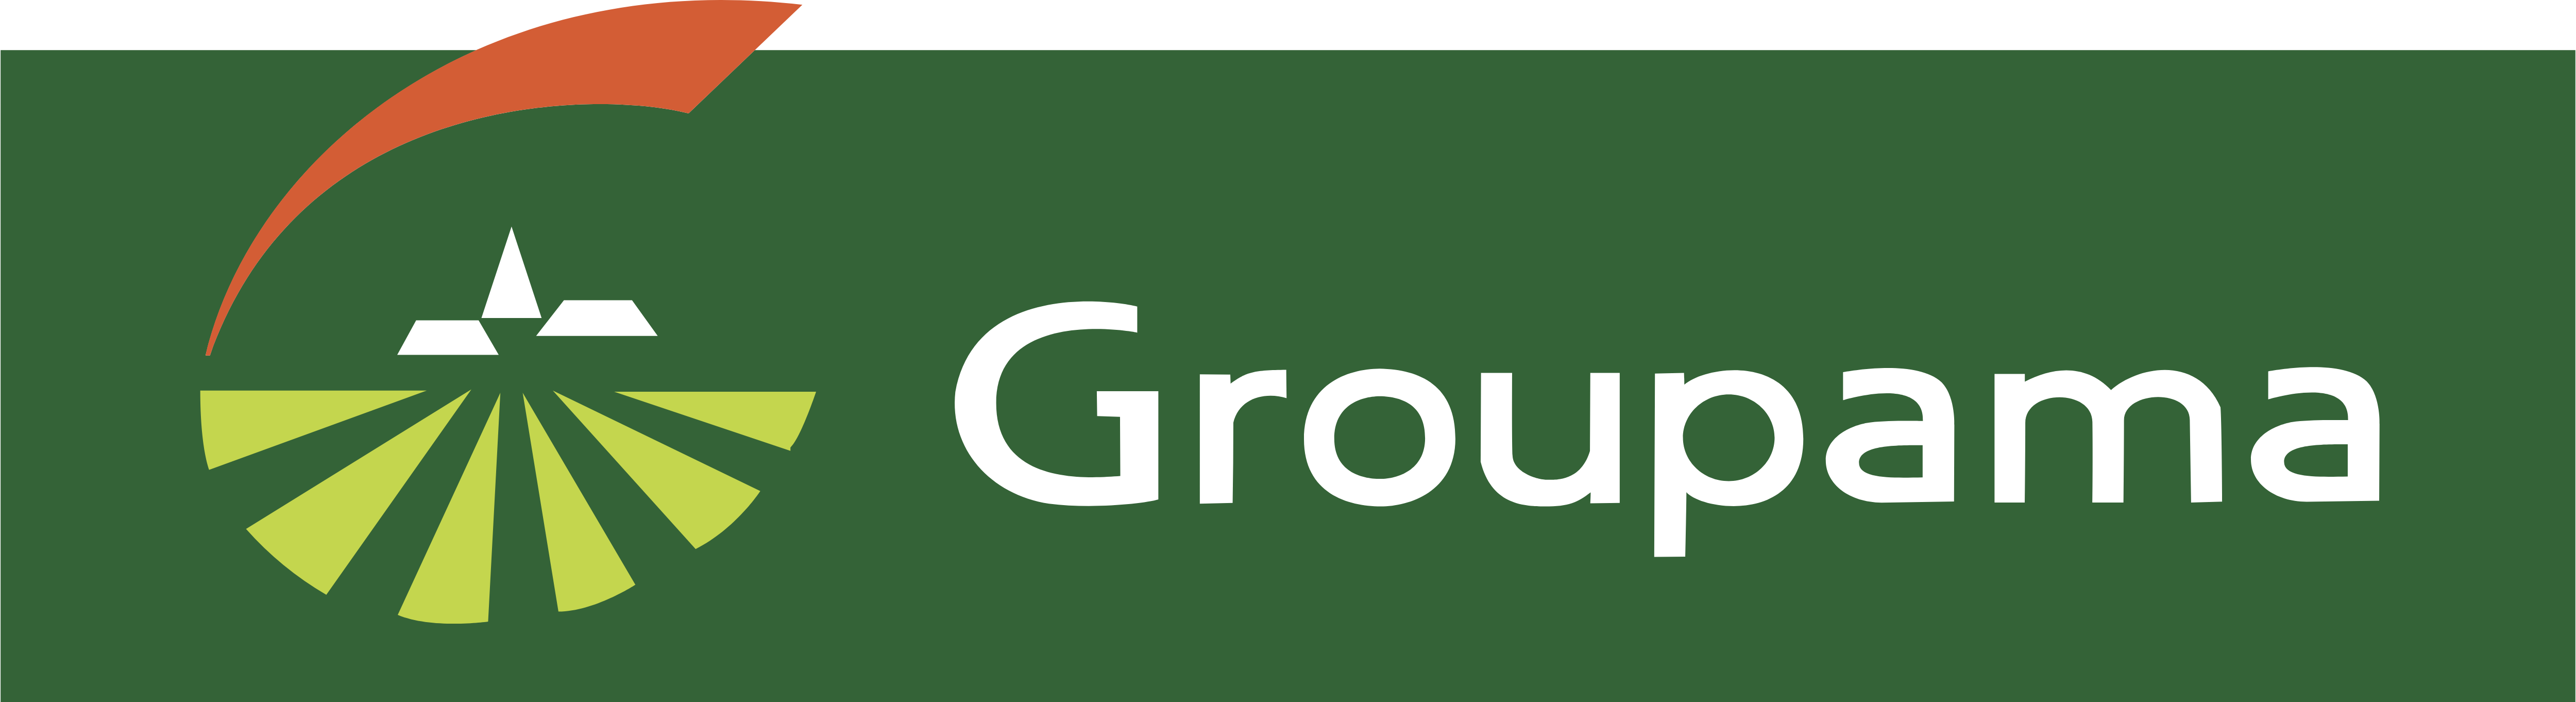 Groupama_logo_green